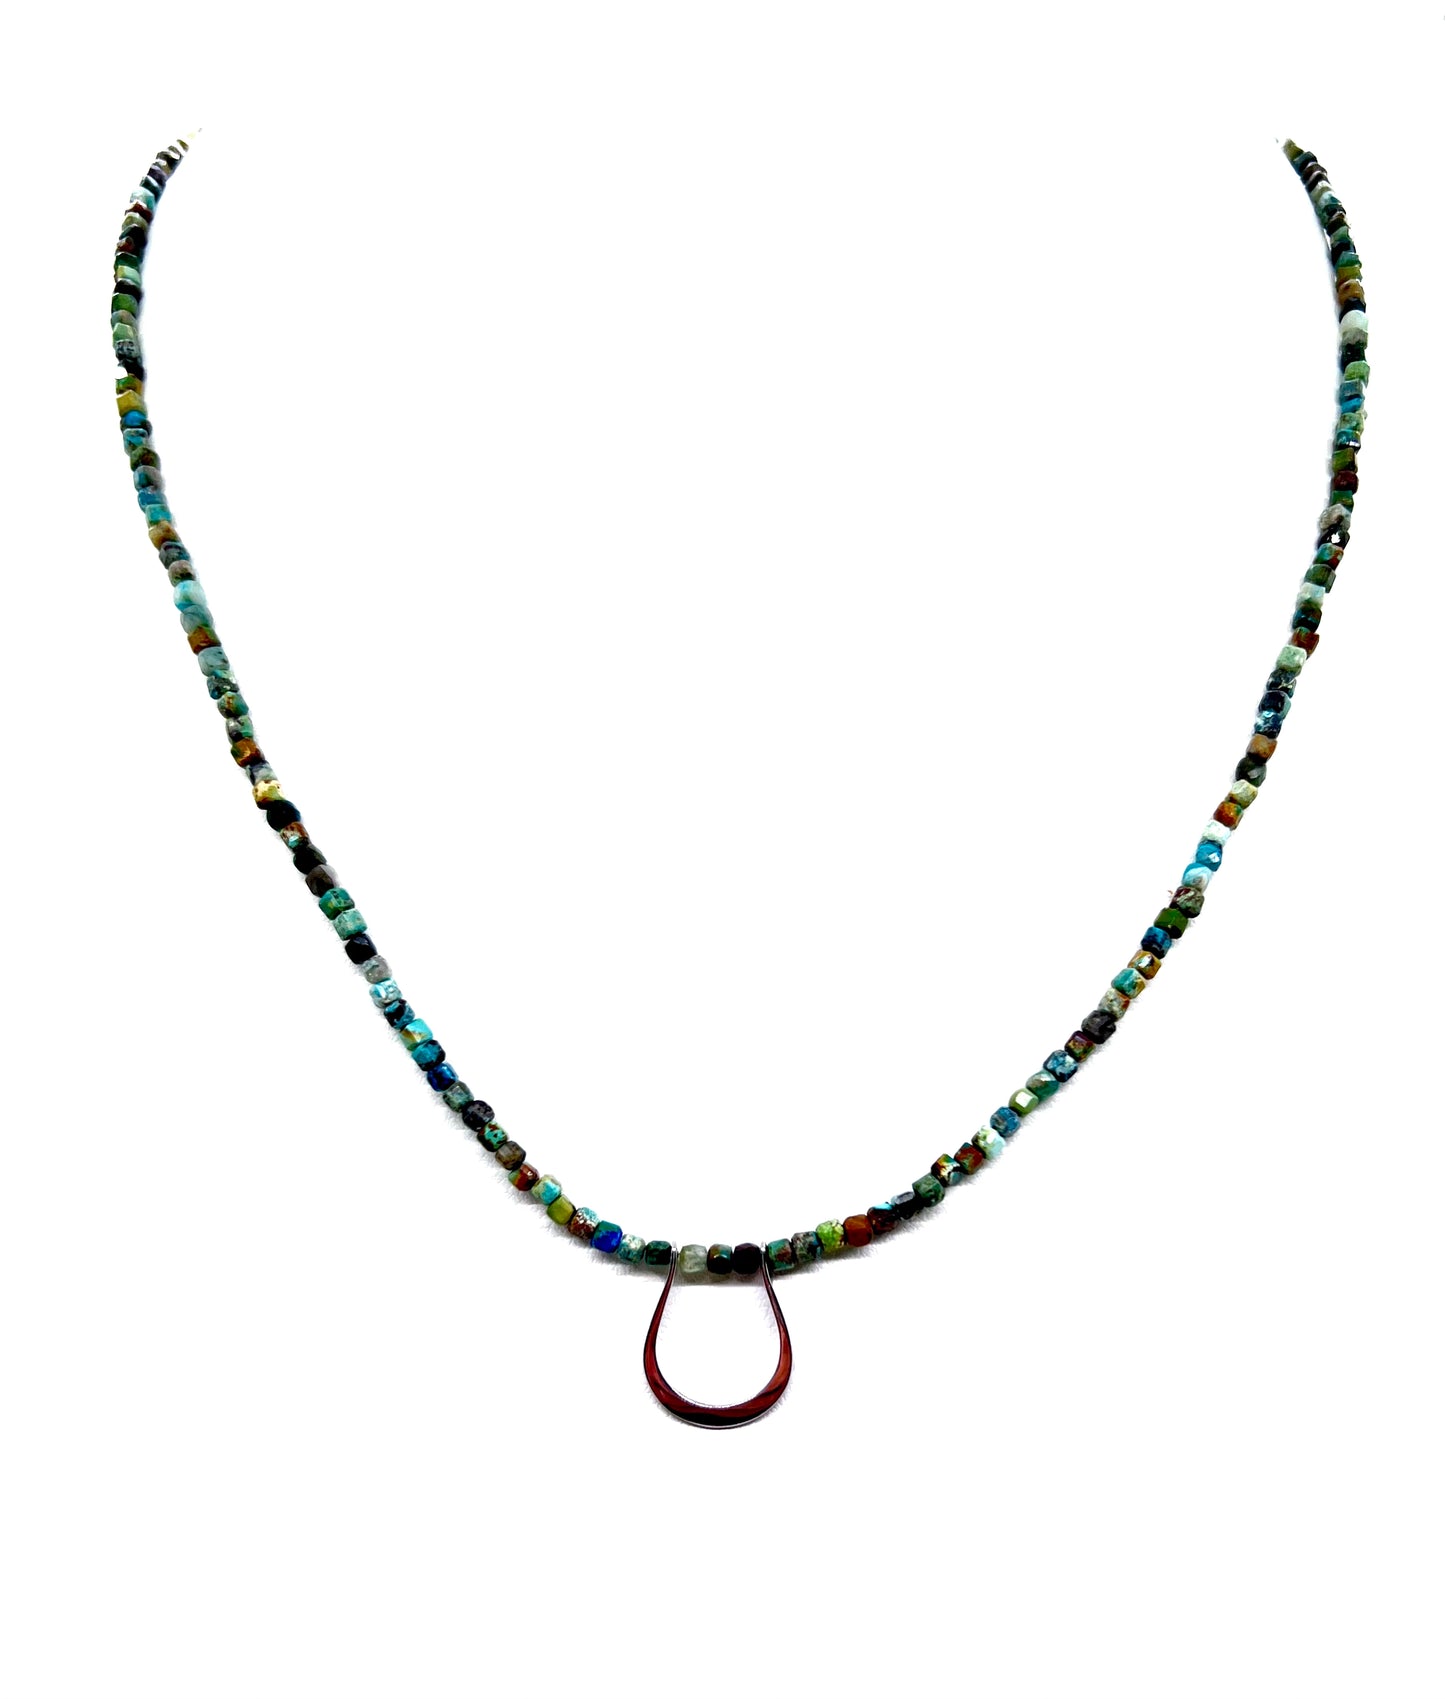 Horseshoe Pendant Necklace with Natural Turquoise